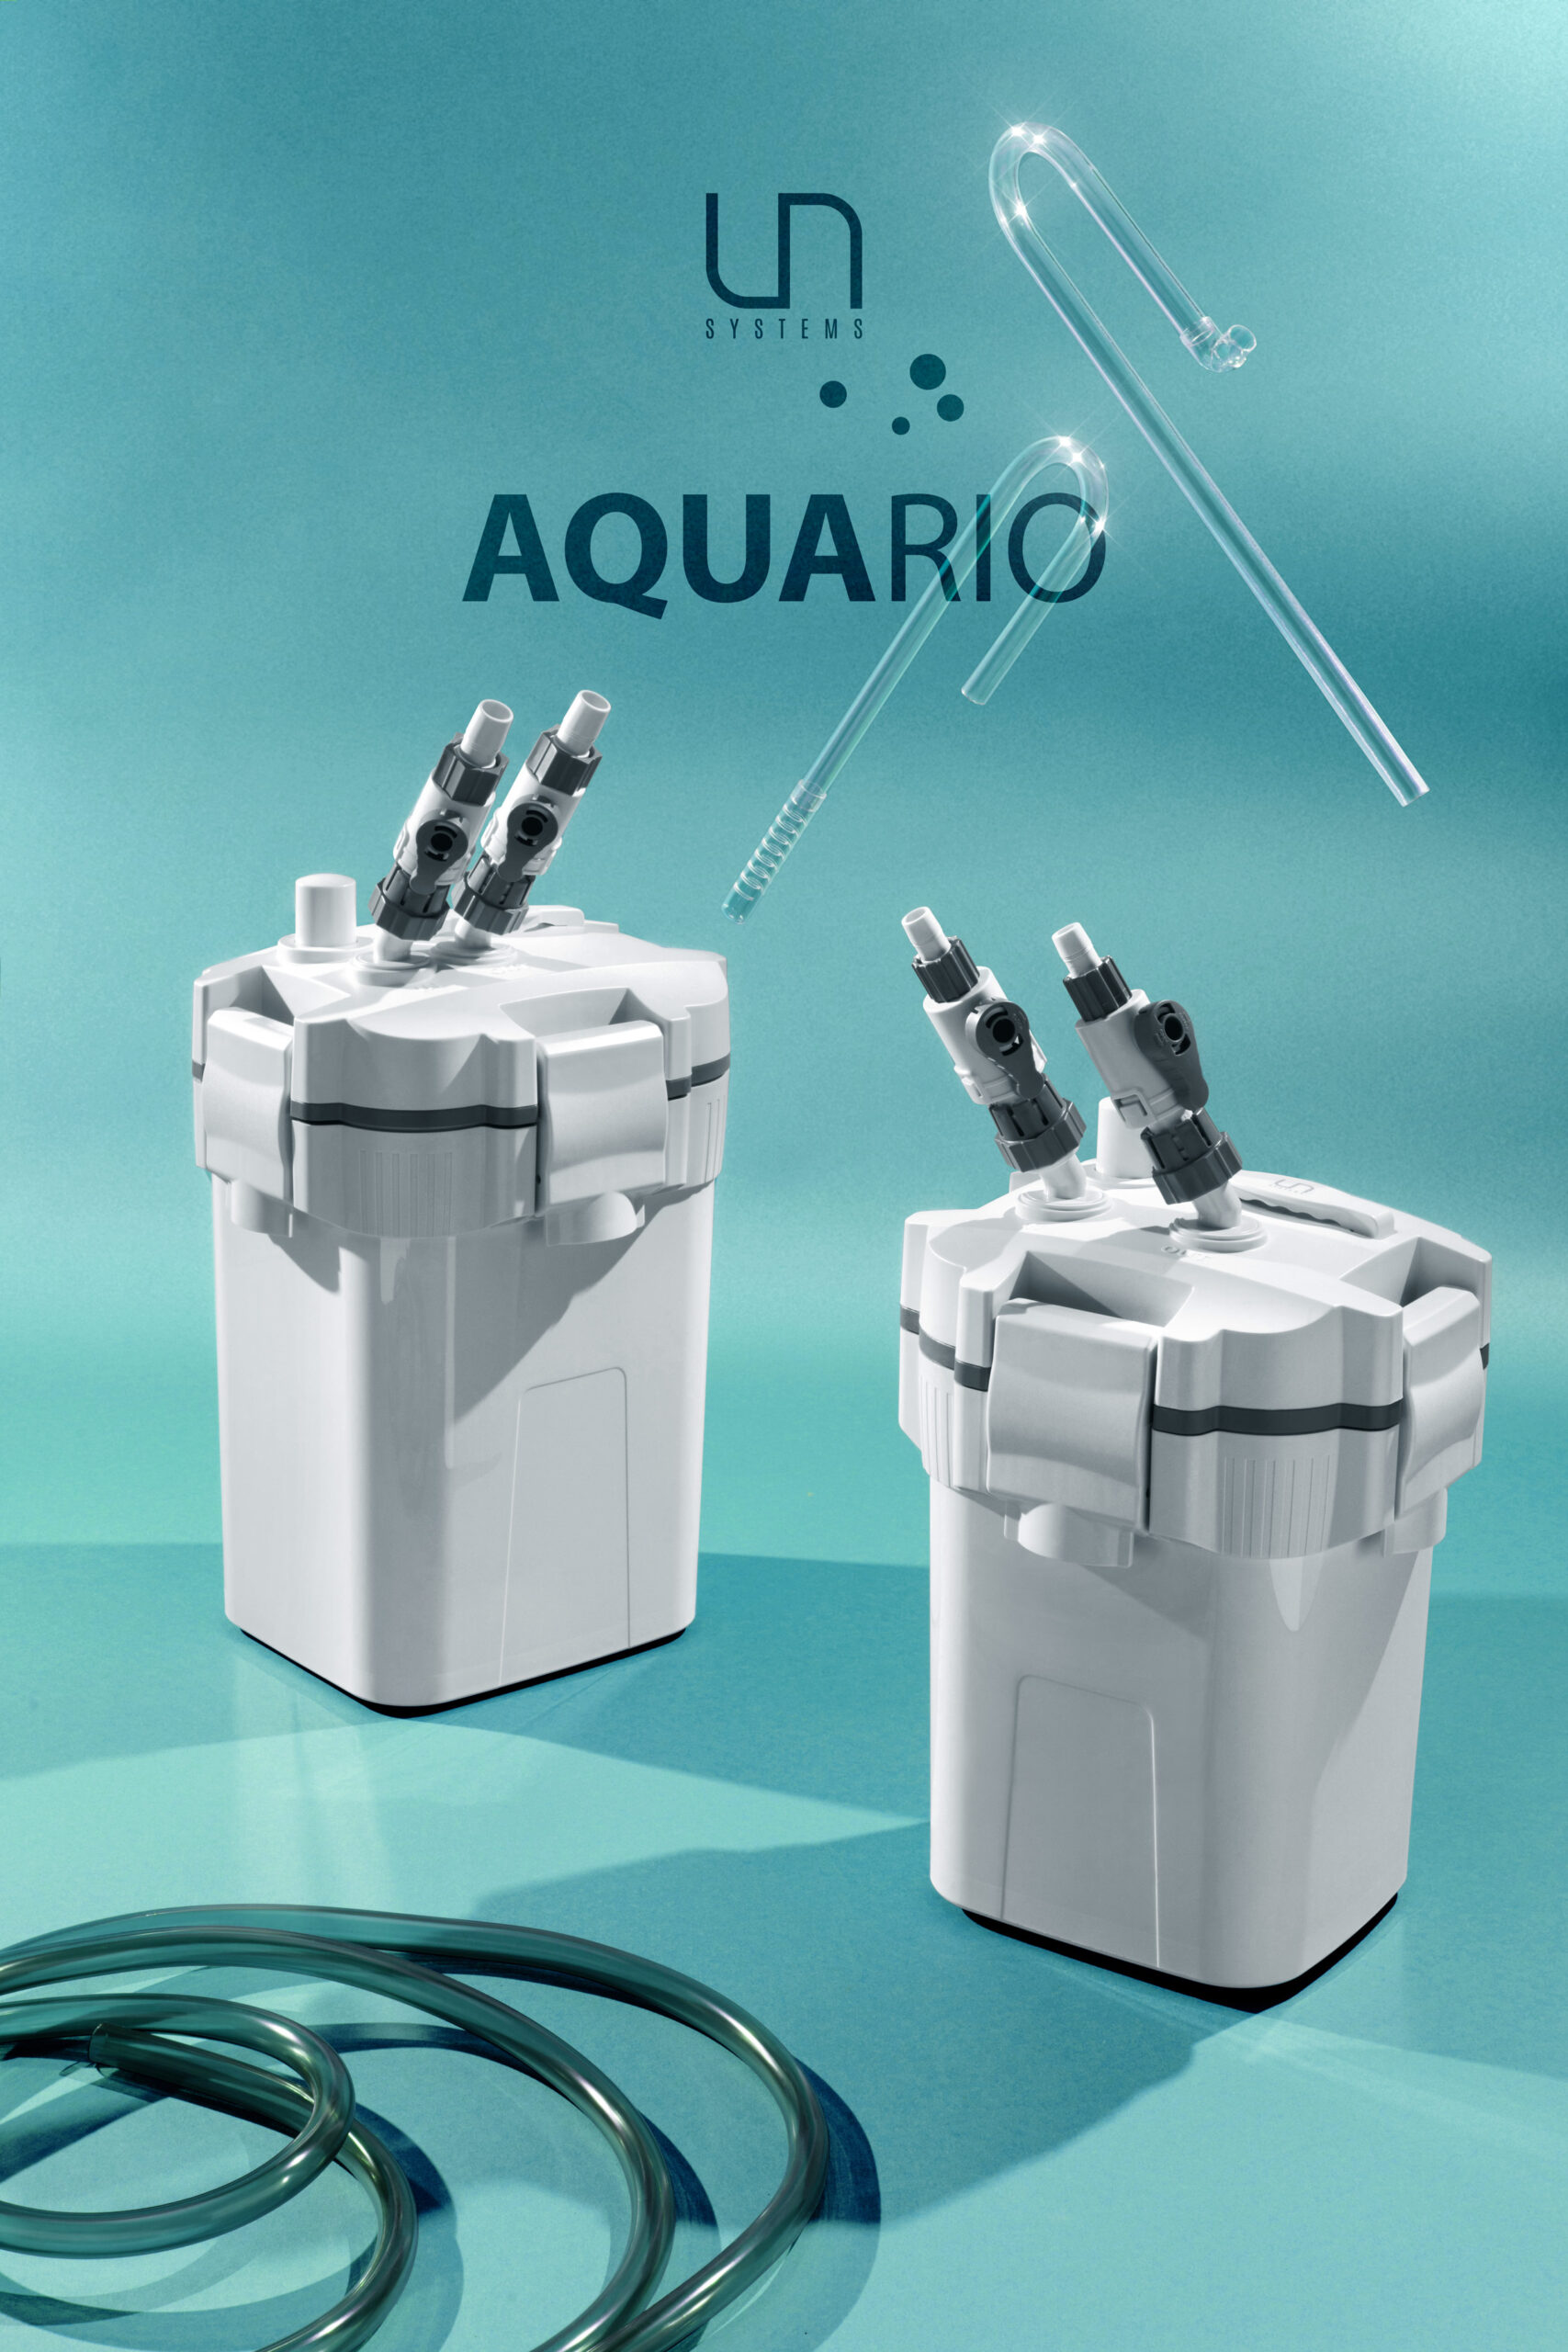 UNS x Aquario collaboration aquarium delta canister filter neo flow lily pipes